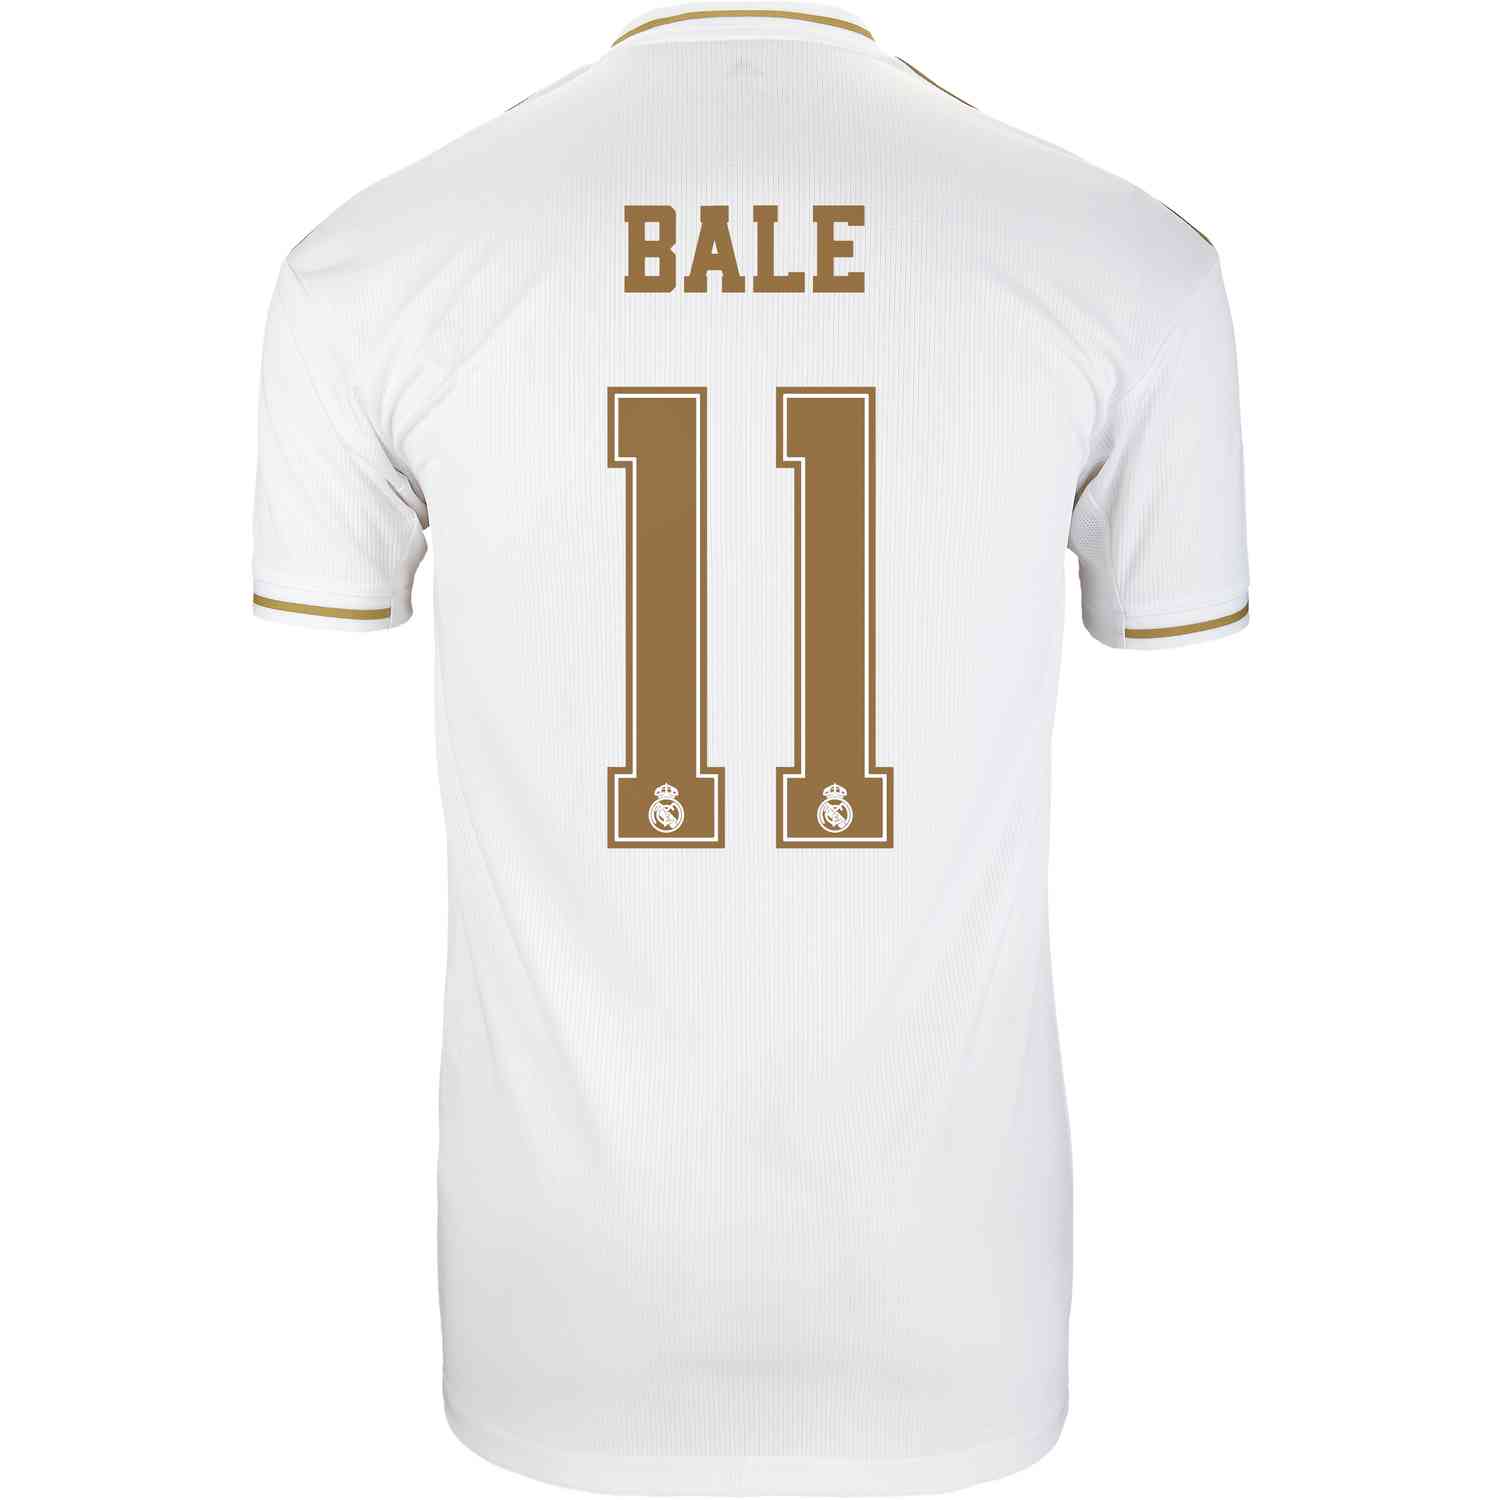 2019/20 adidas Gareth Bale Real Madrid Home Jersey - SoccerPro